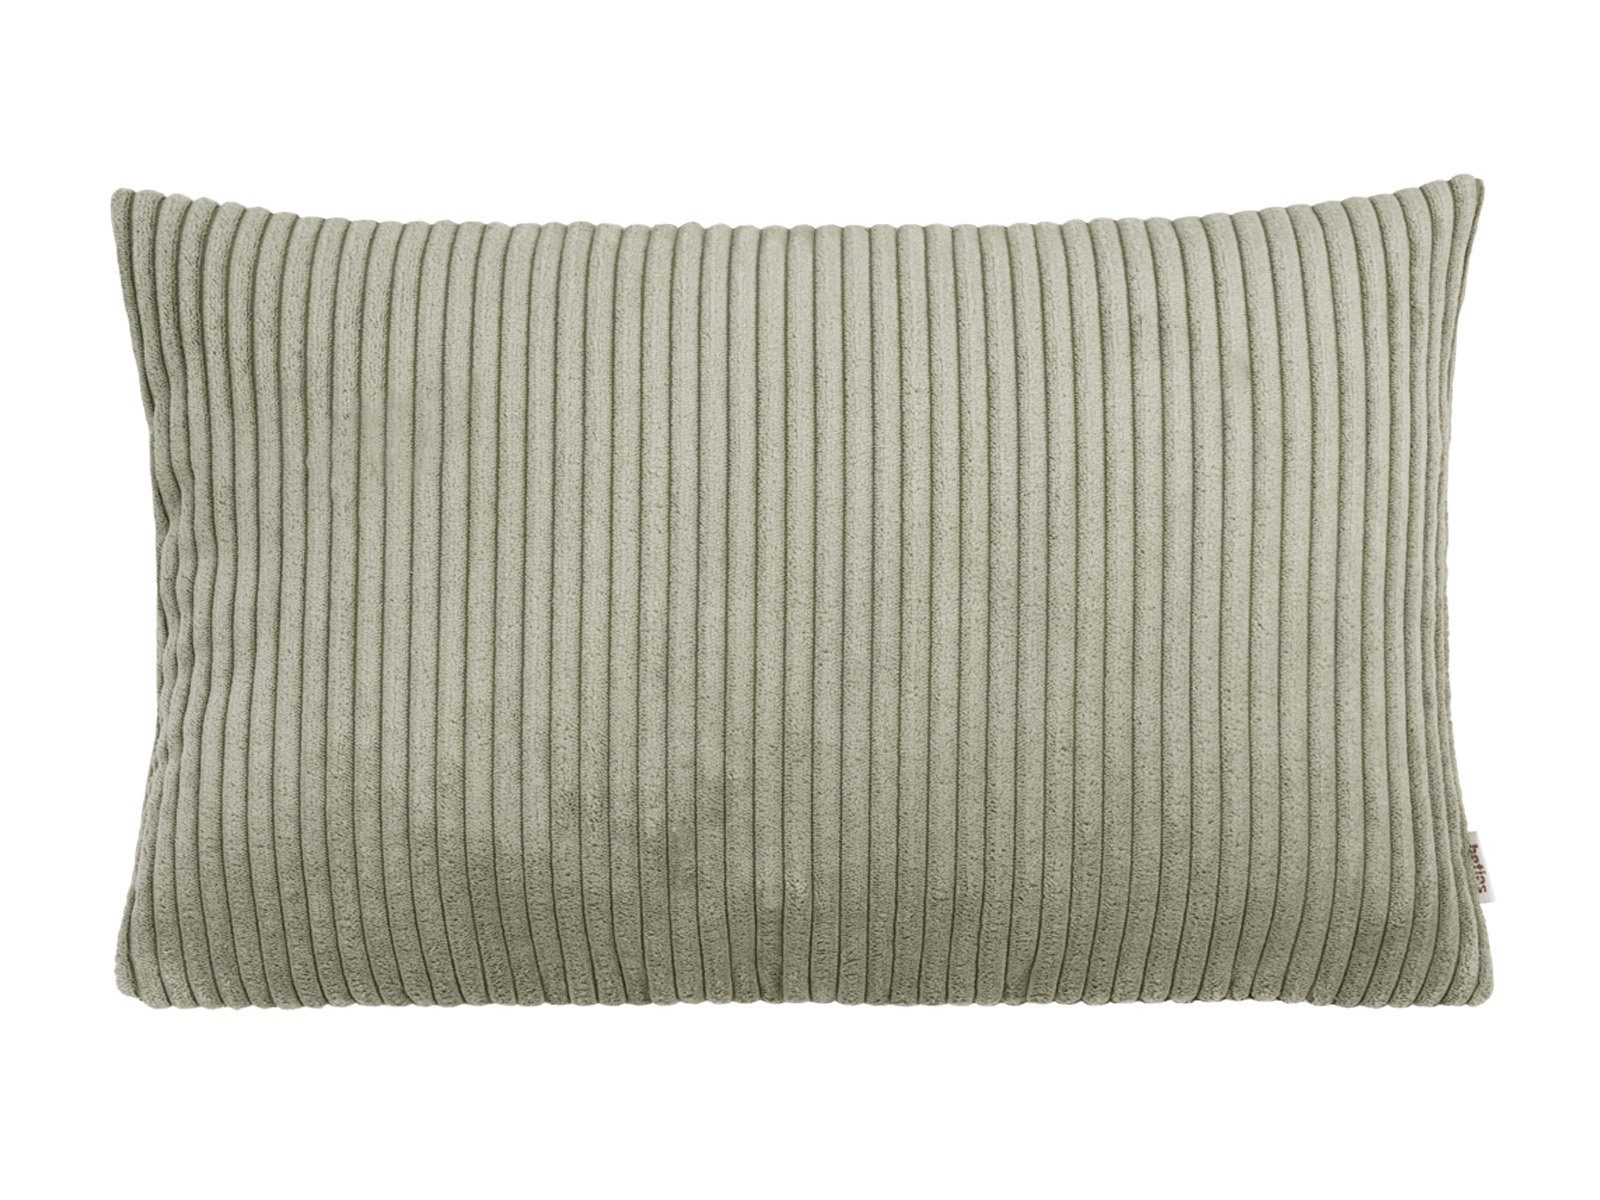 Kissenbezug HYggelig taupe-grau cm Stück), Deko- Samt-Breit-Cord (1 30x50 Kissenhülle beties ca. No.2